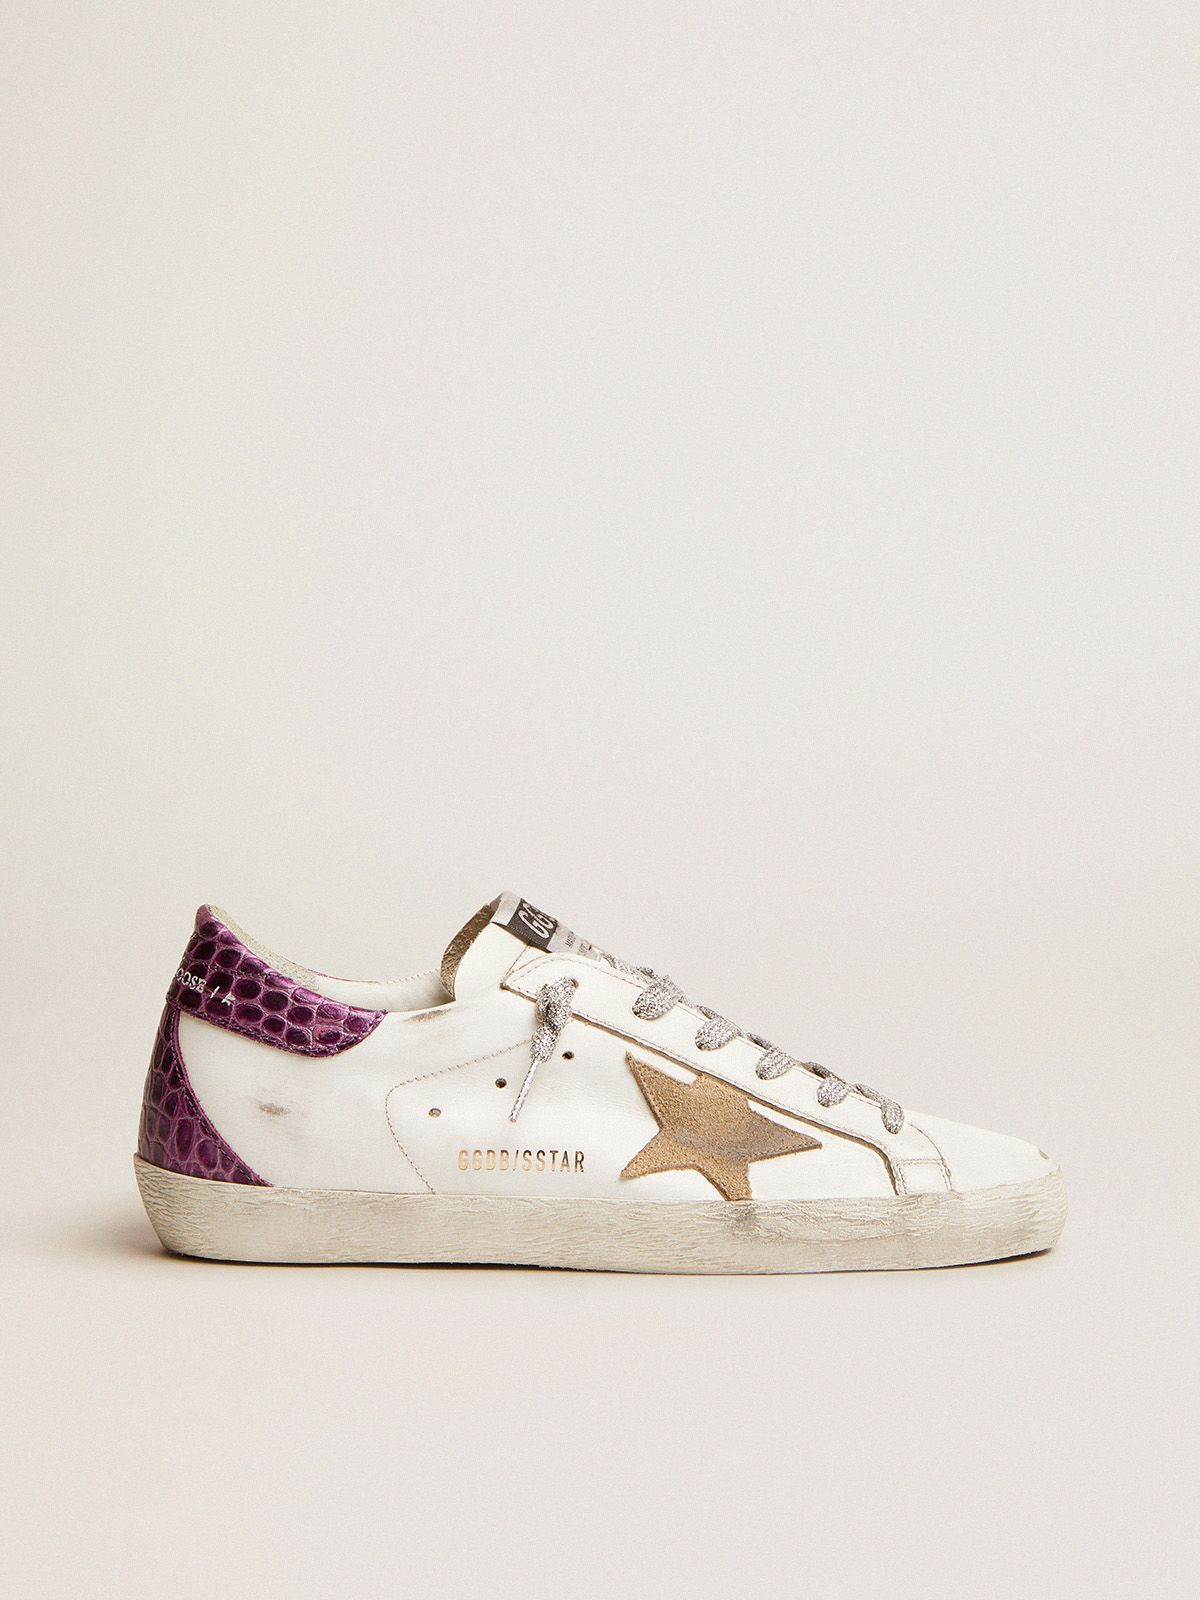 Super-Star LTD sneakers with purple crocodile-print leather heel tab